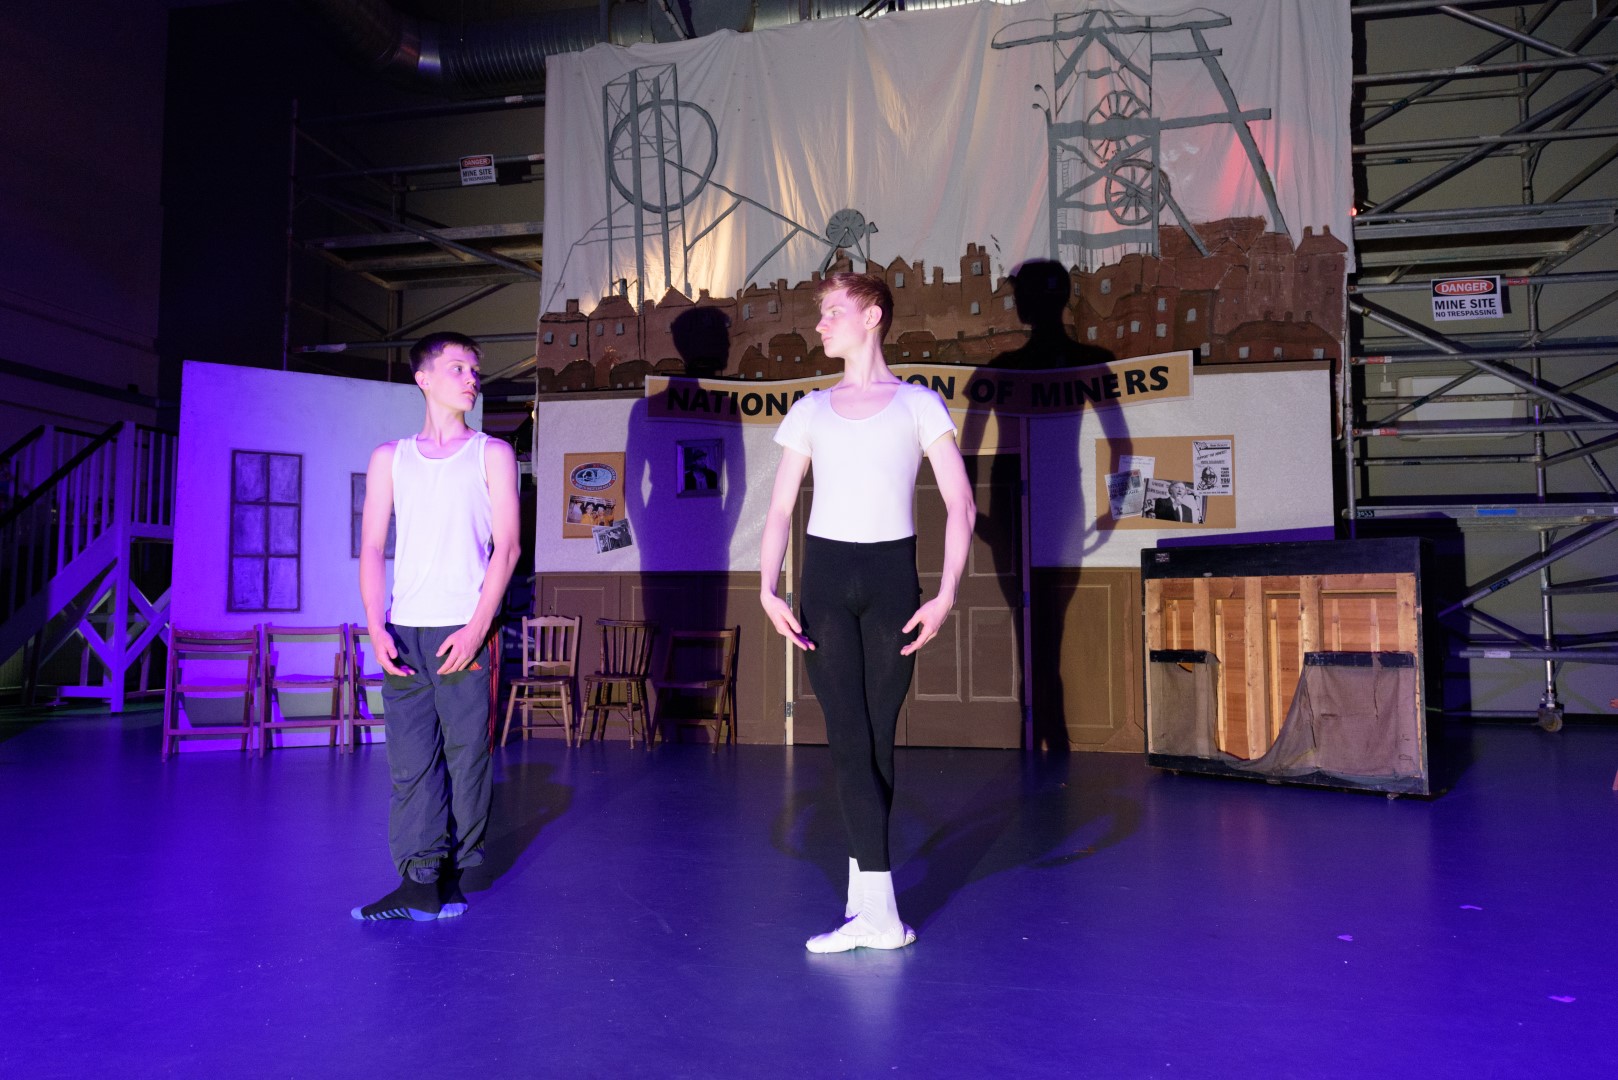 Event Photography at Richard Lander Schools 'Billy Elliot' production